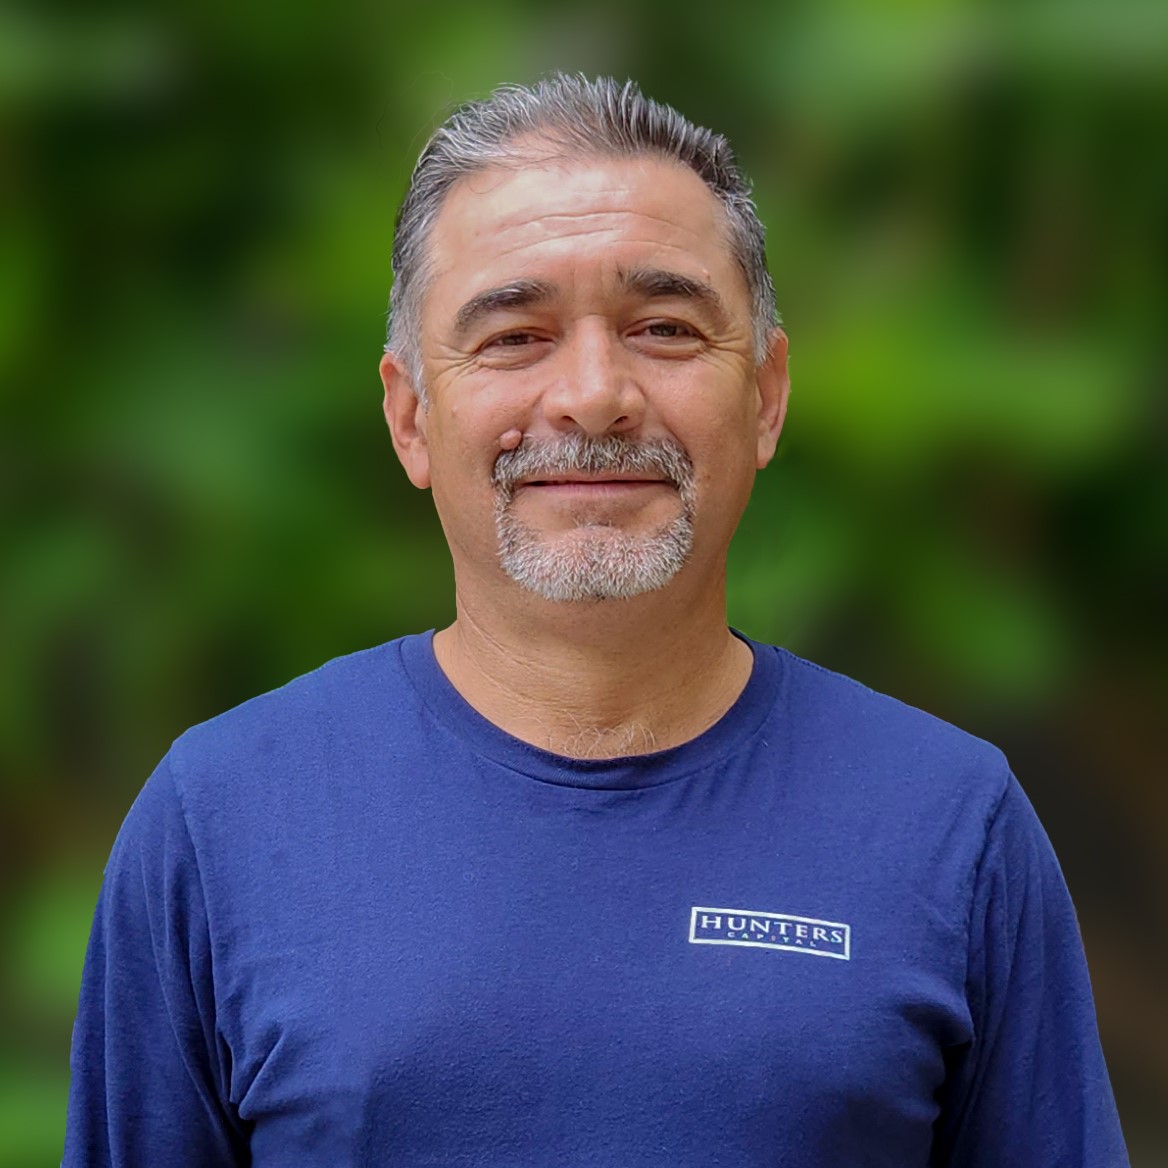 Jose Rosiles, Maintenance Supervisor at Hunters Capital